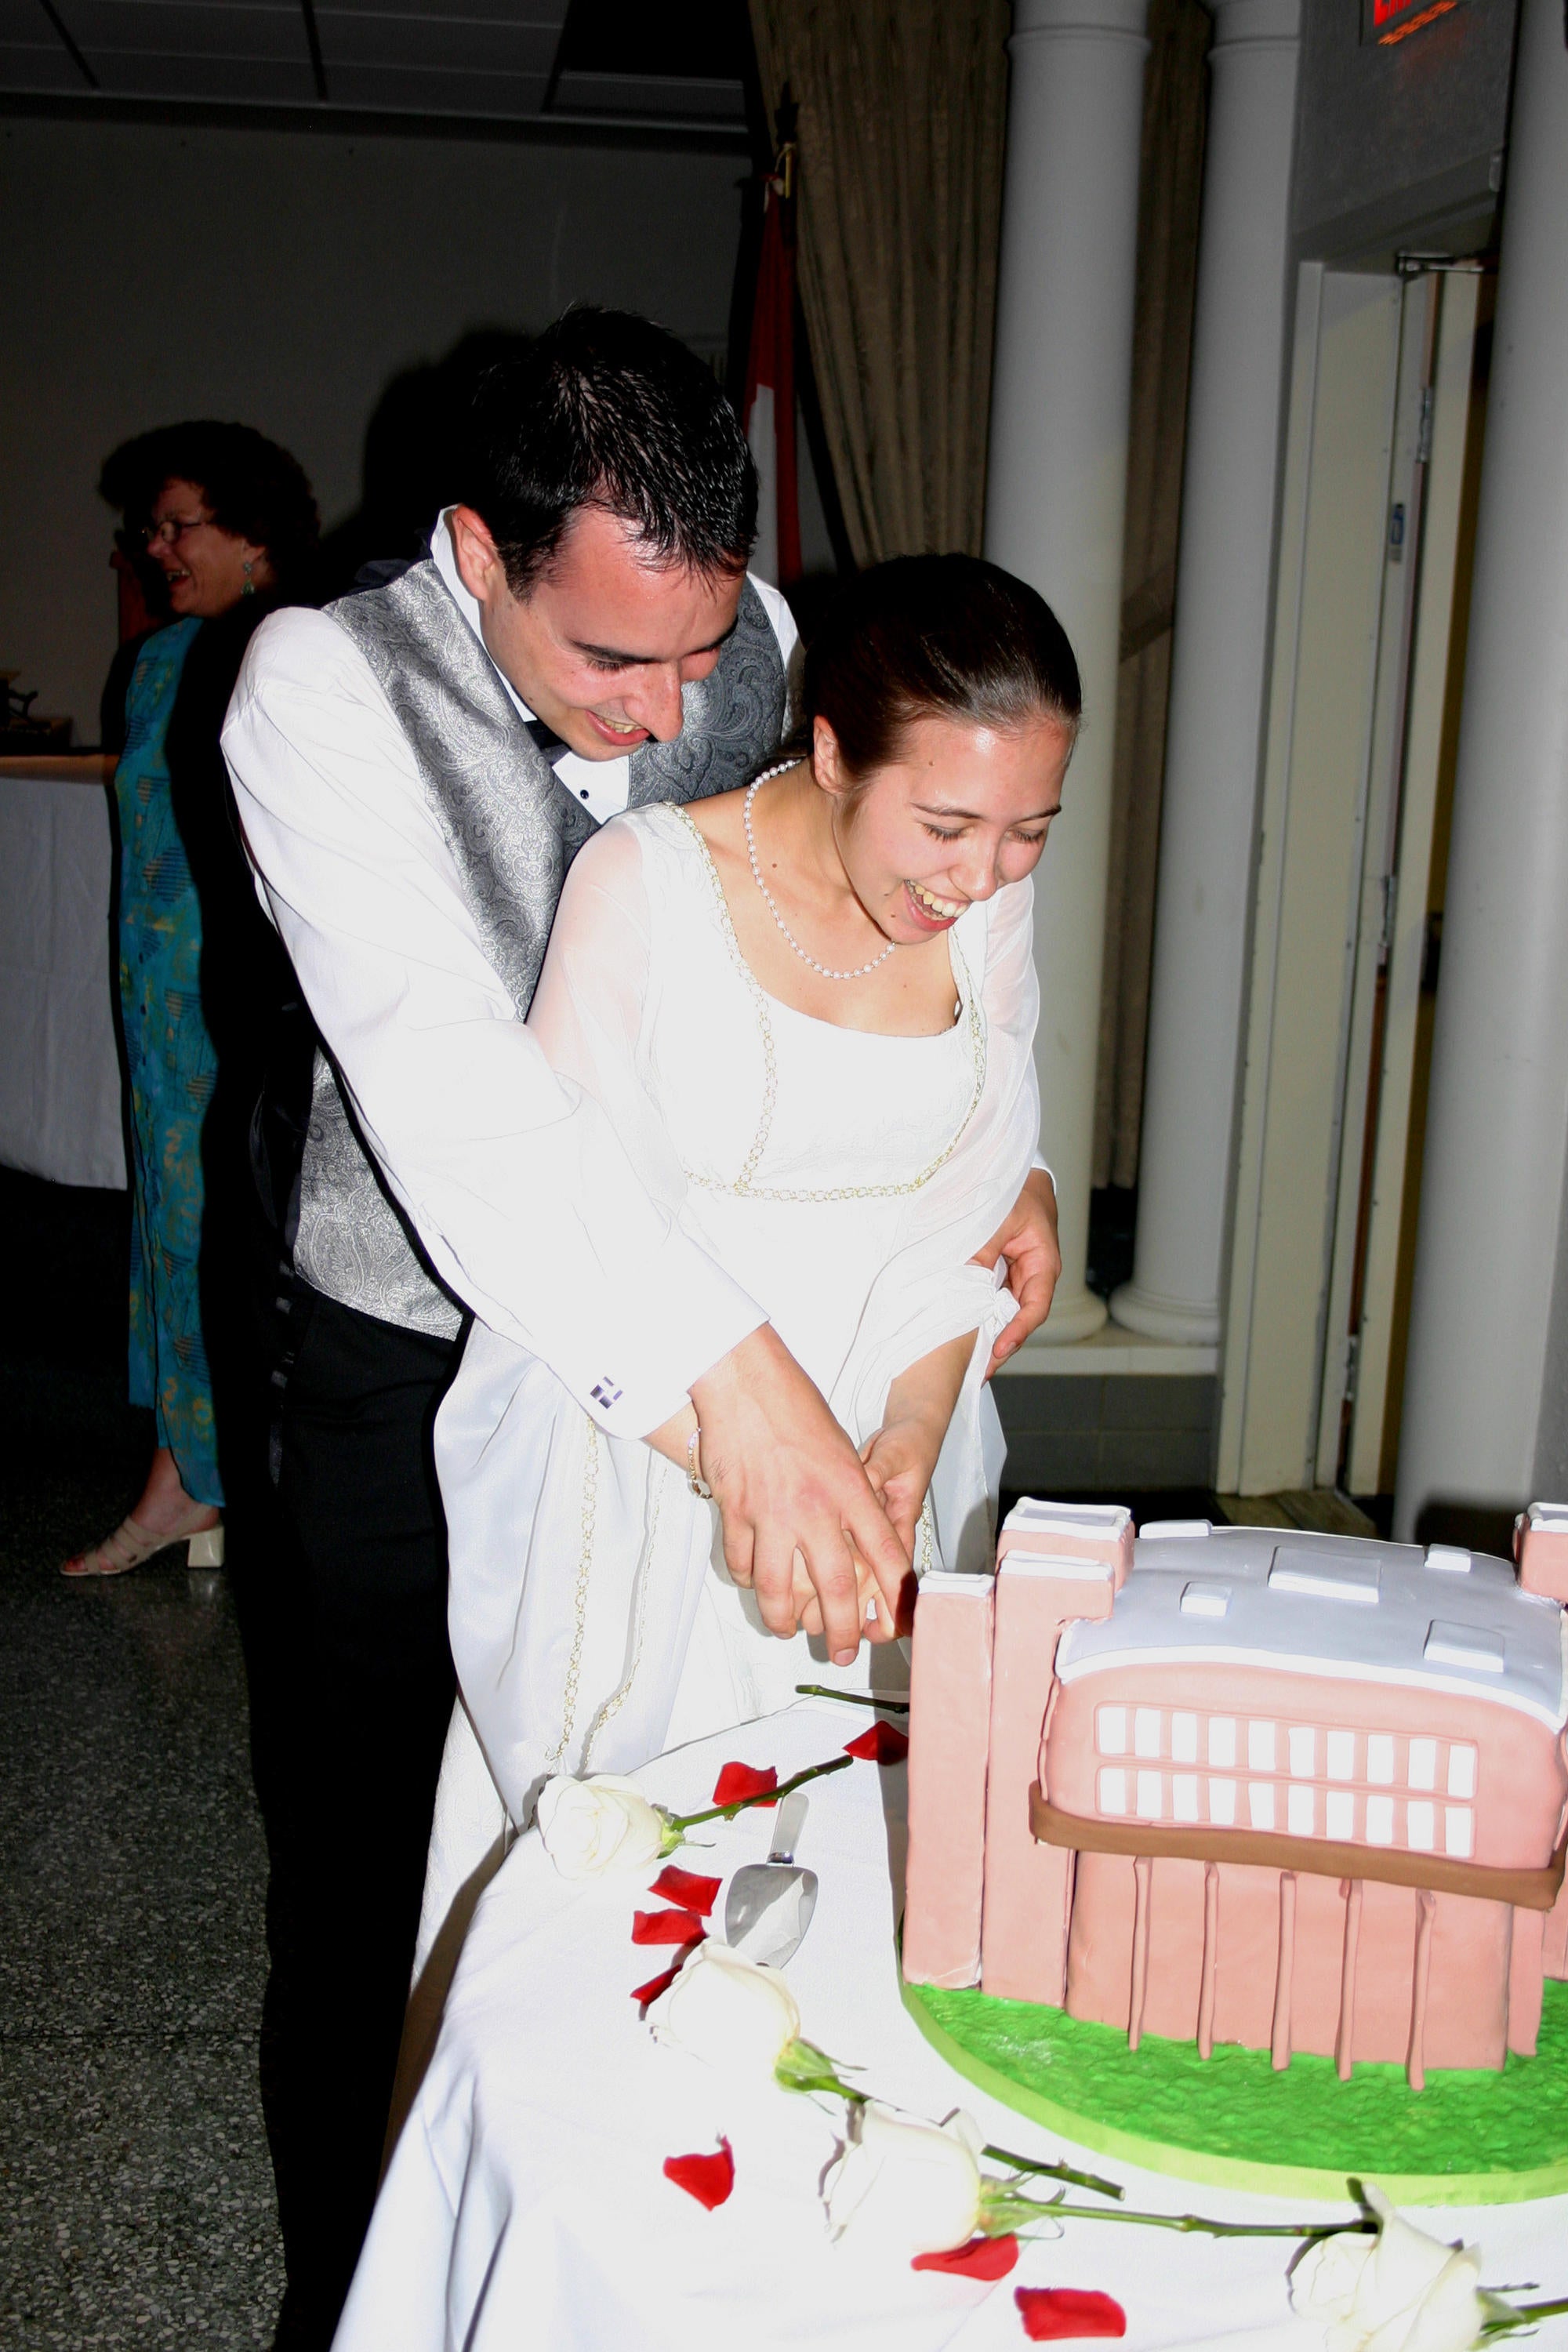 Bride and groom cut a cake model of MC 